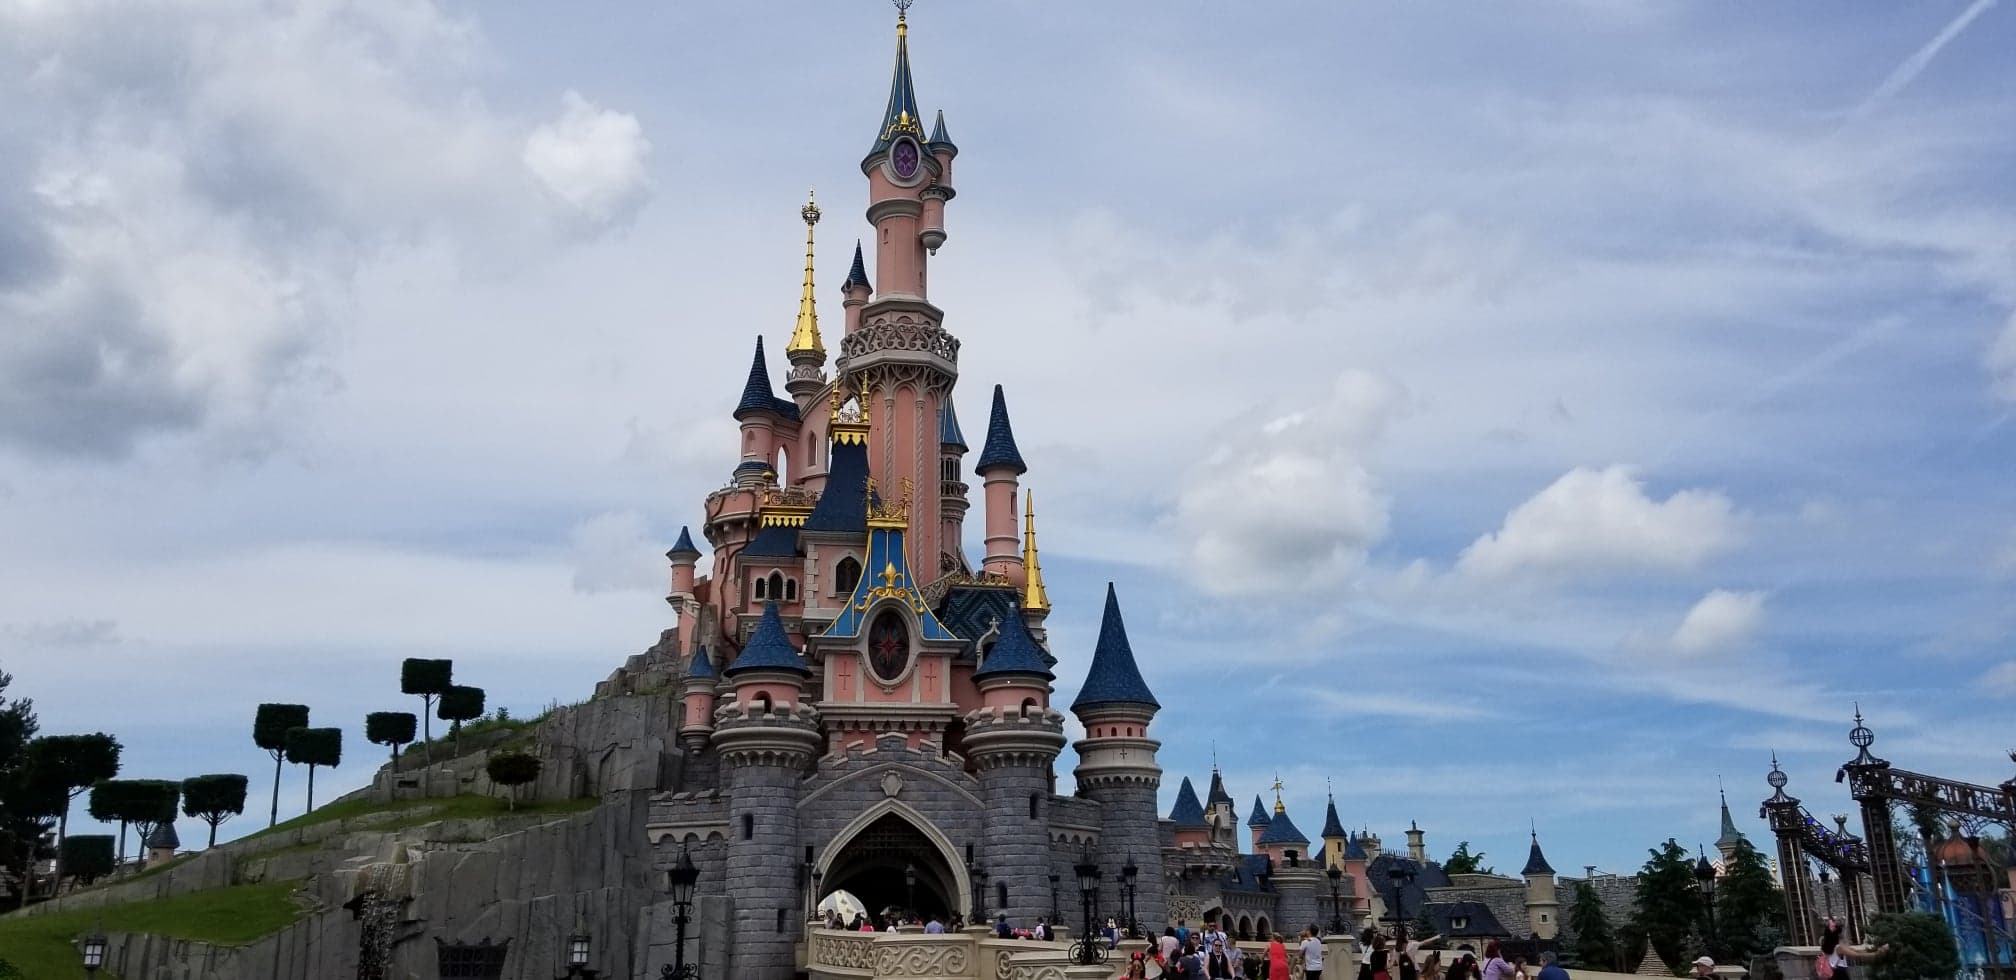 Disneyland Paris Announces Special Ticket Offer